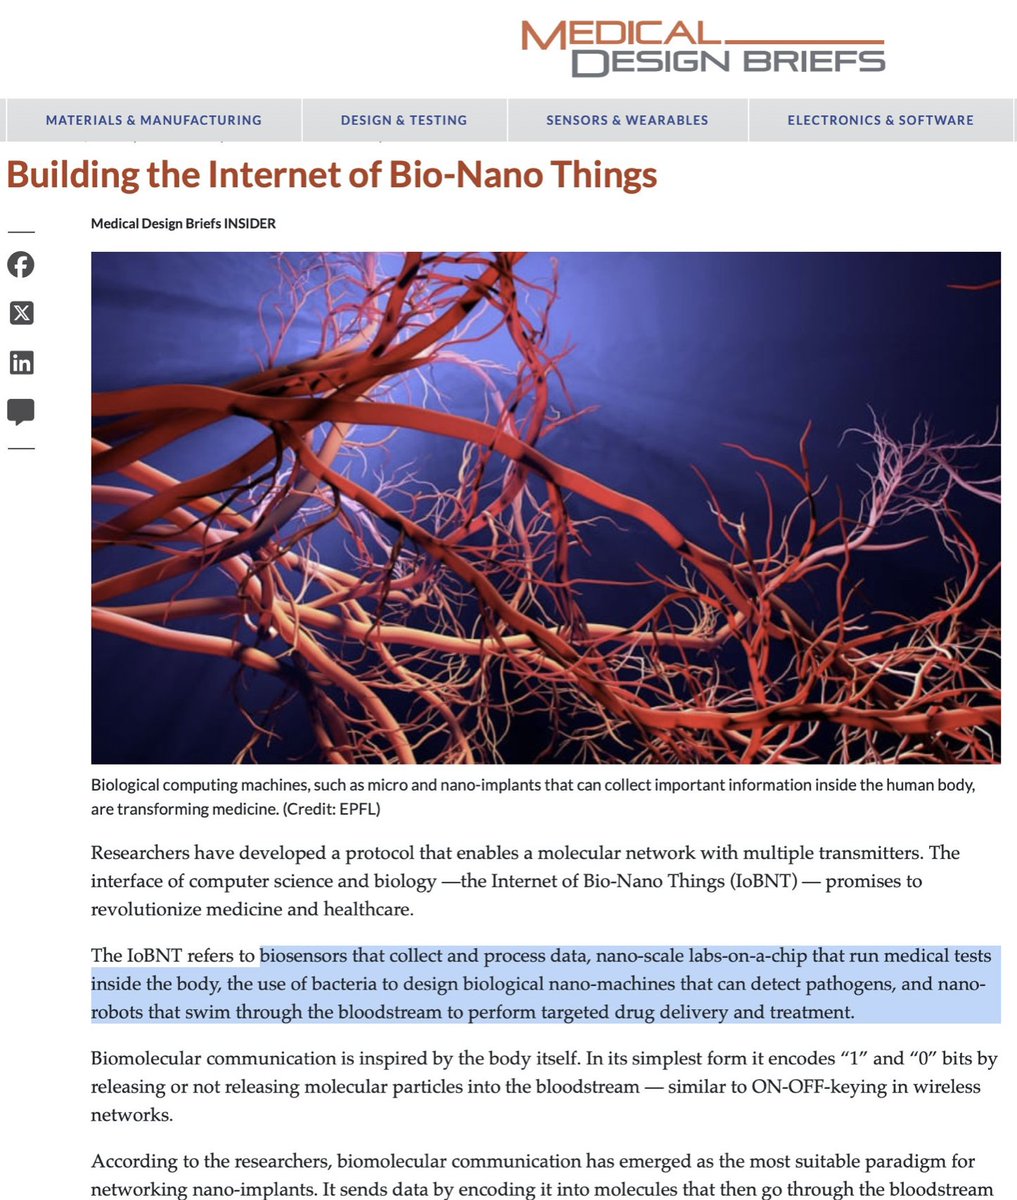 Doctors Are Building the Internet of Bio-Nano Things in  the Cardiovascular System

#IoBNT

#MedicalBodyAreaNetwork 

#NanoscaleComputing

#MolecularCommunicationRouting

#IntraBodyNanoSensorNetworks

#NanoCyberInterface

medicaldesignbriefs.com/component/cont…